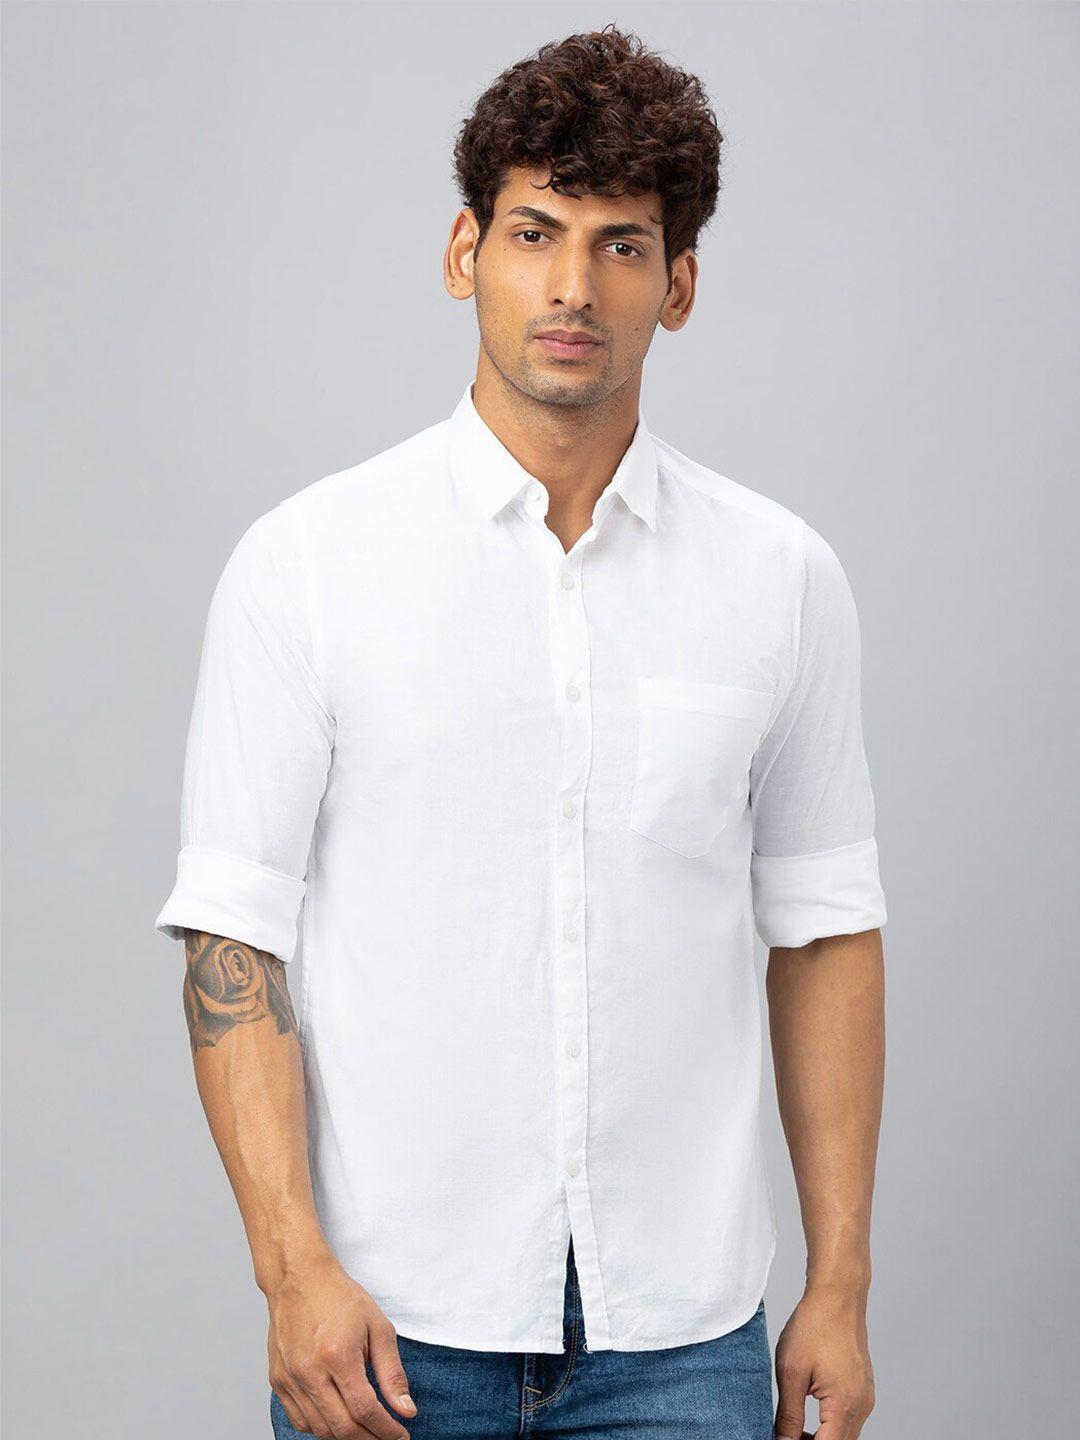 globus spread collar pure cotton casual shirt